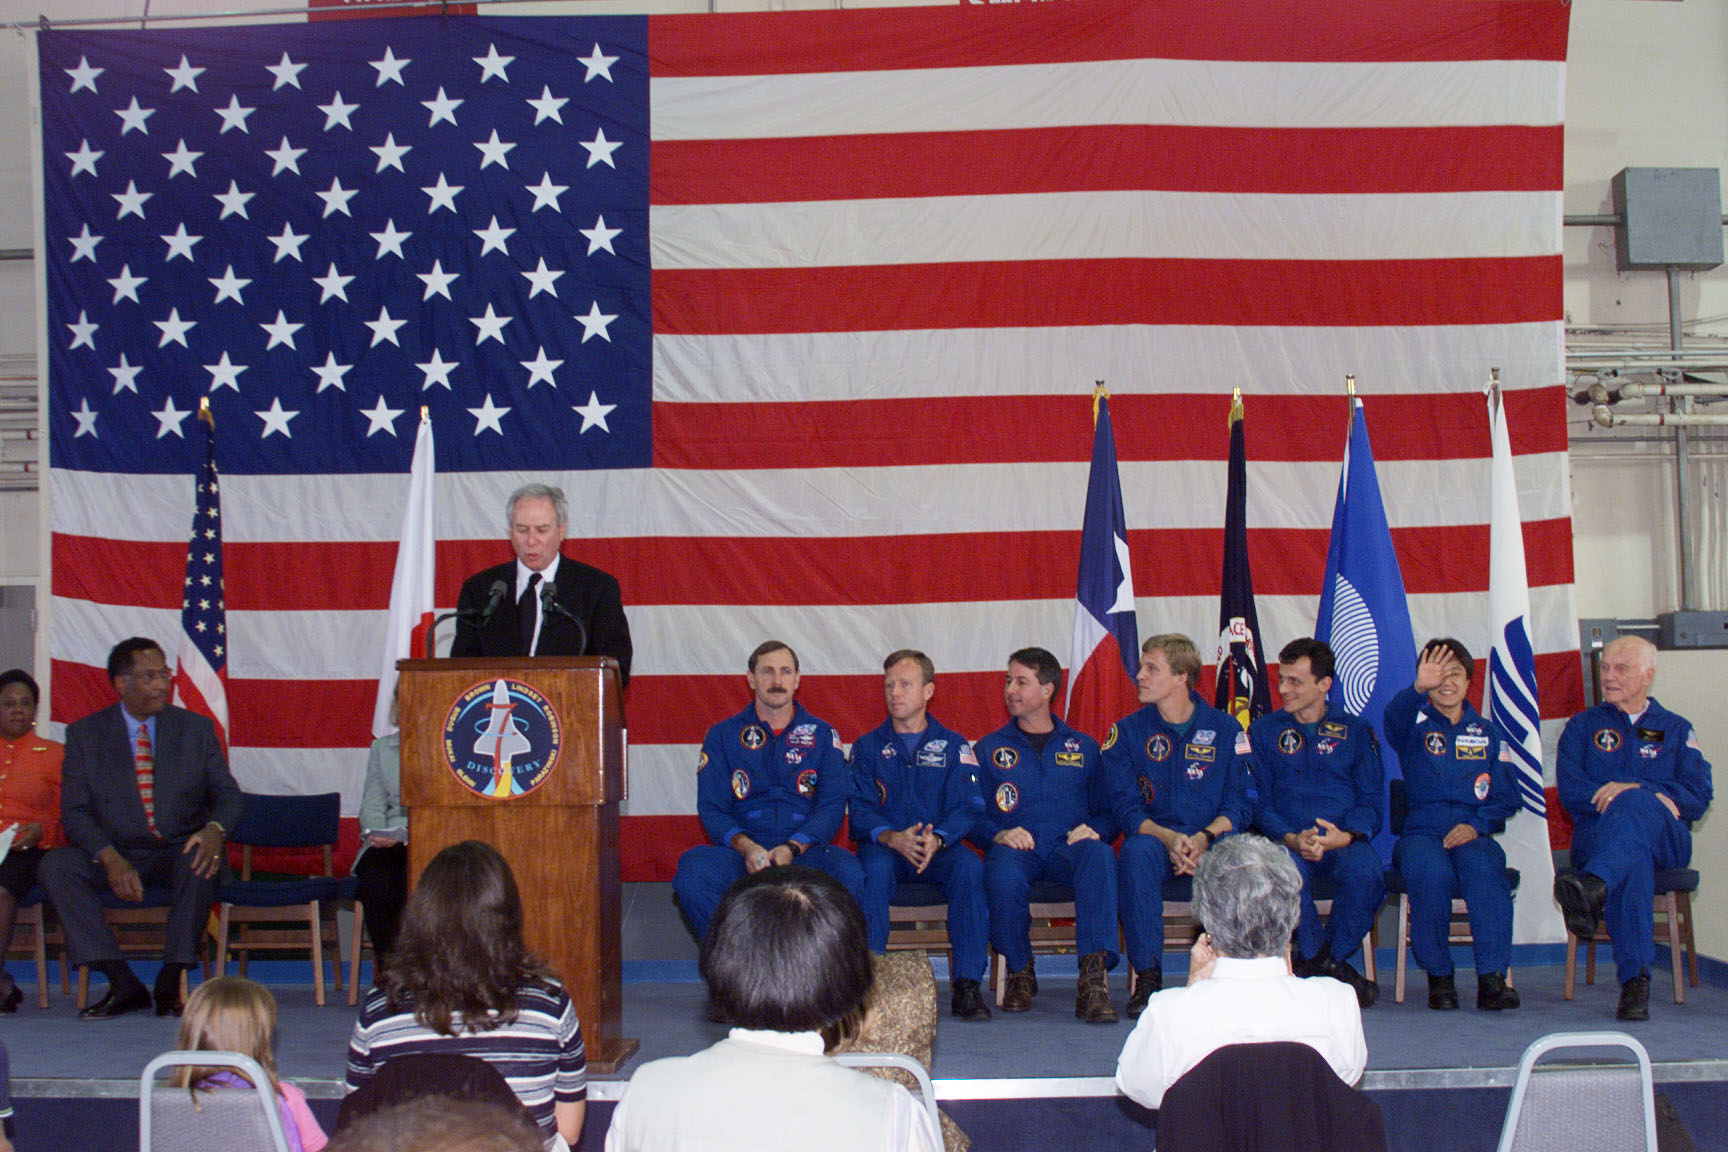 NASA Administrator Daniel S. Goldin addresses the crowd at Ellington as the STS-95 astronauts listen